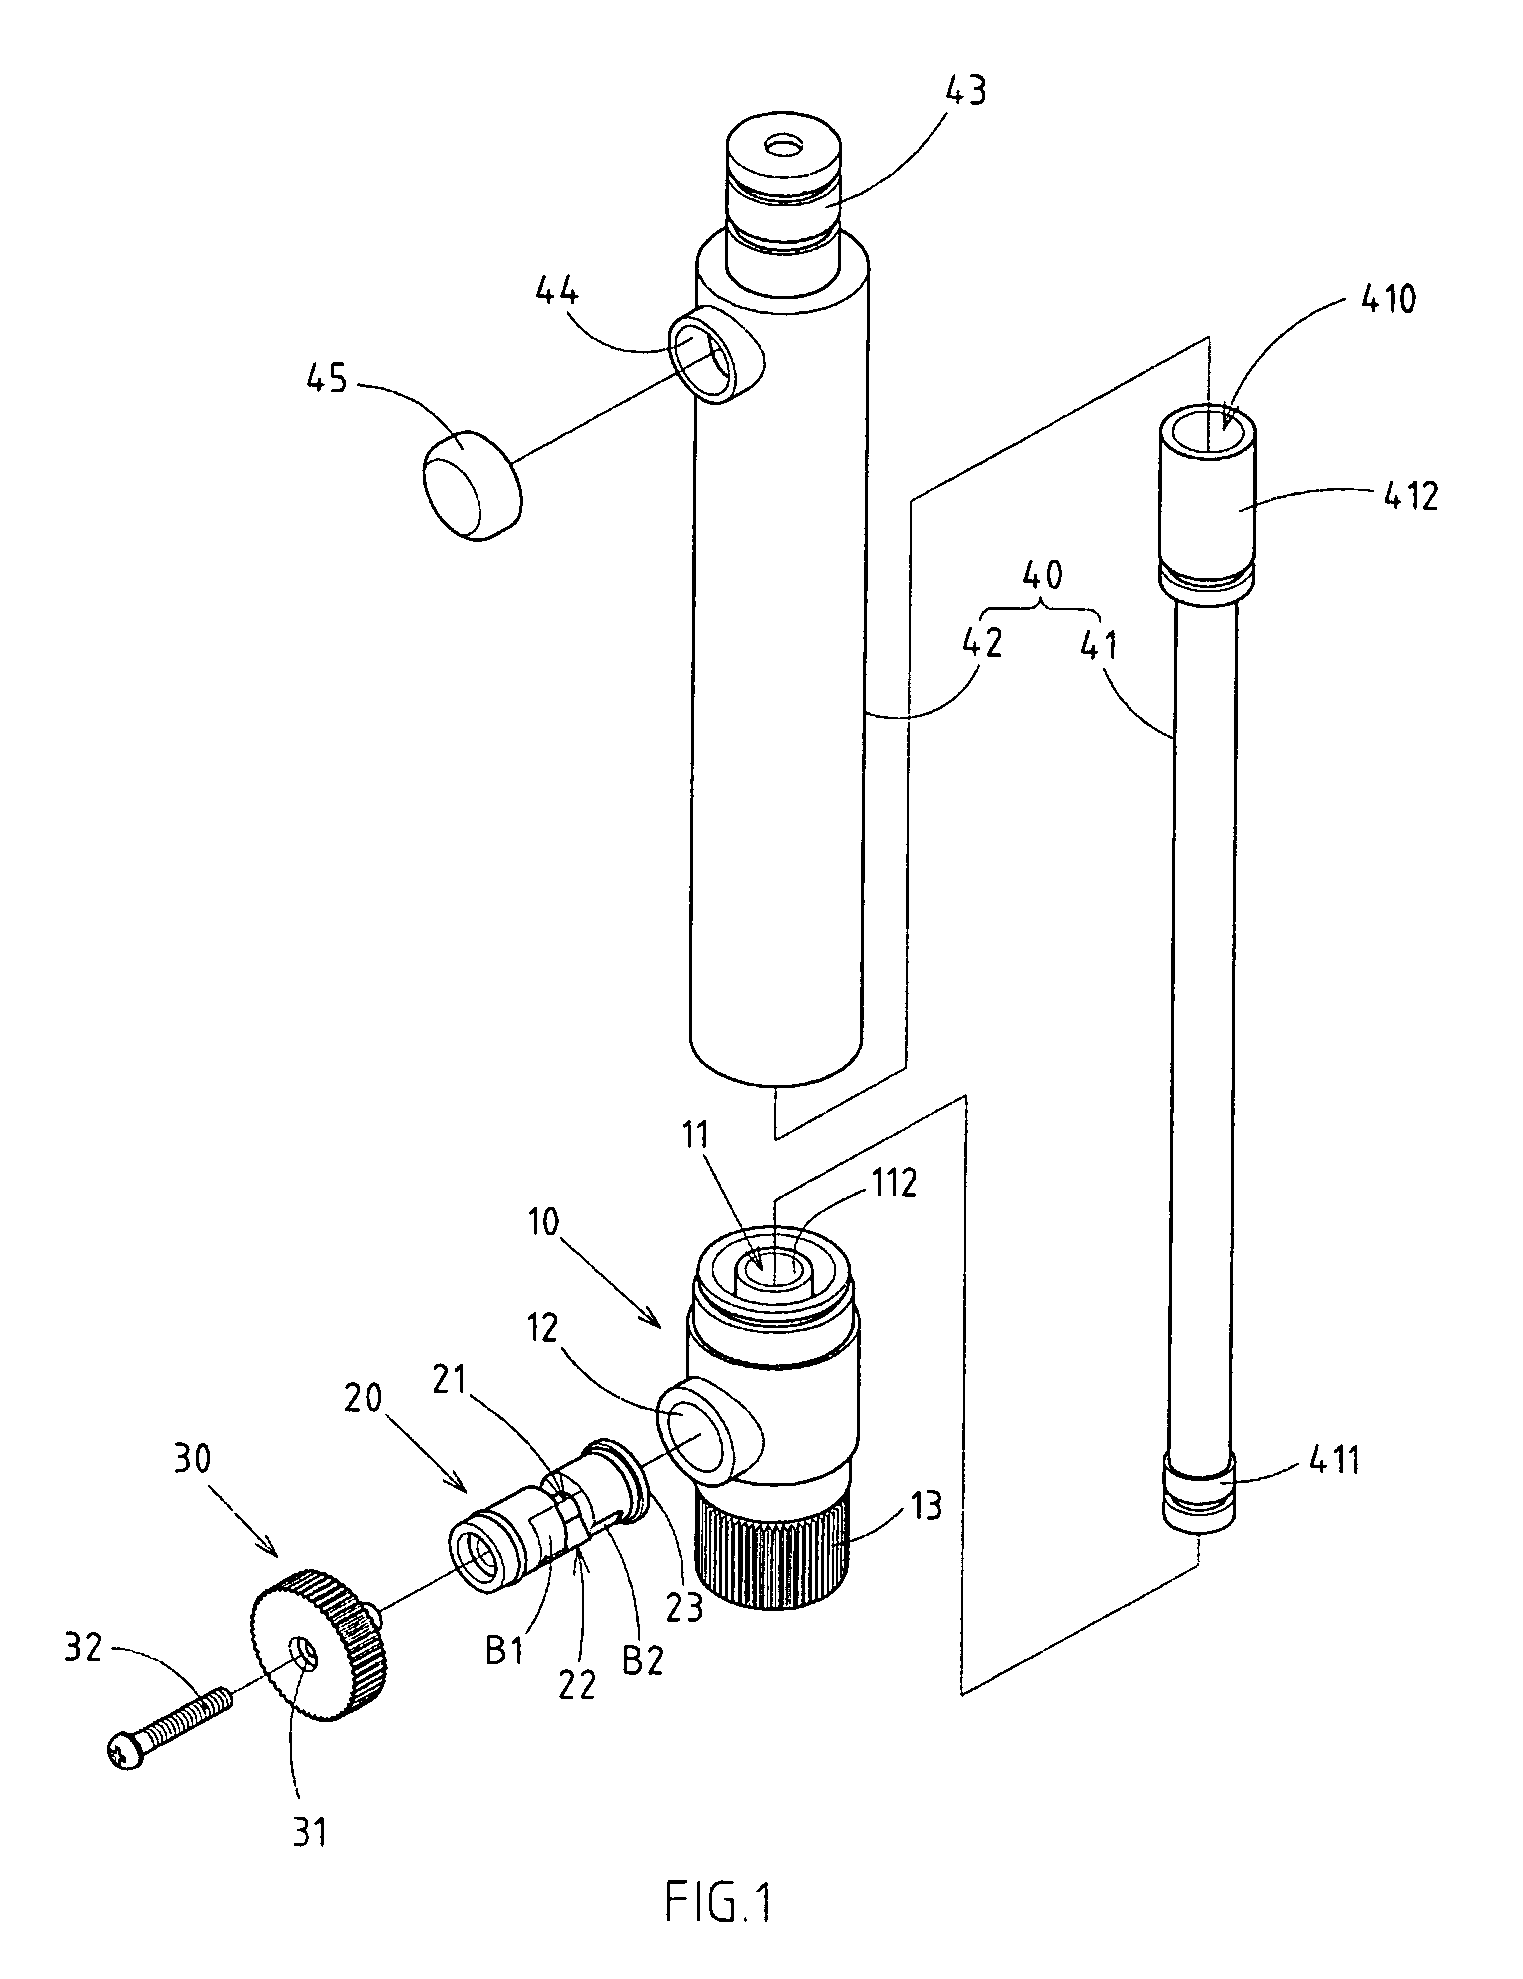 Sprinkler provided with a built-in mechanism for dispensing detergent